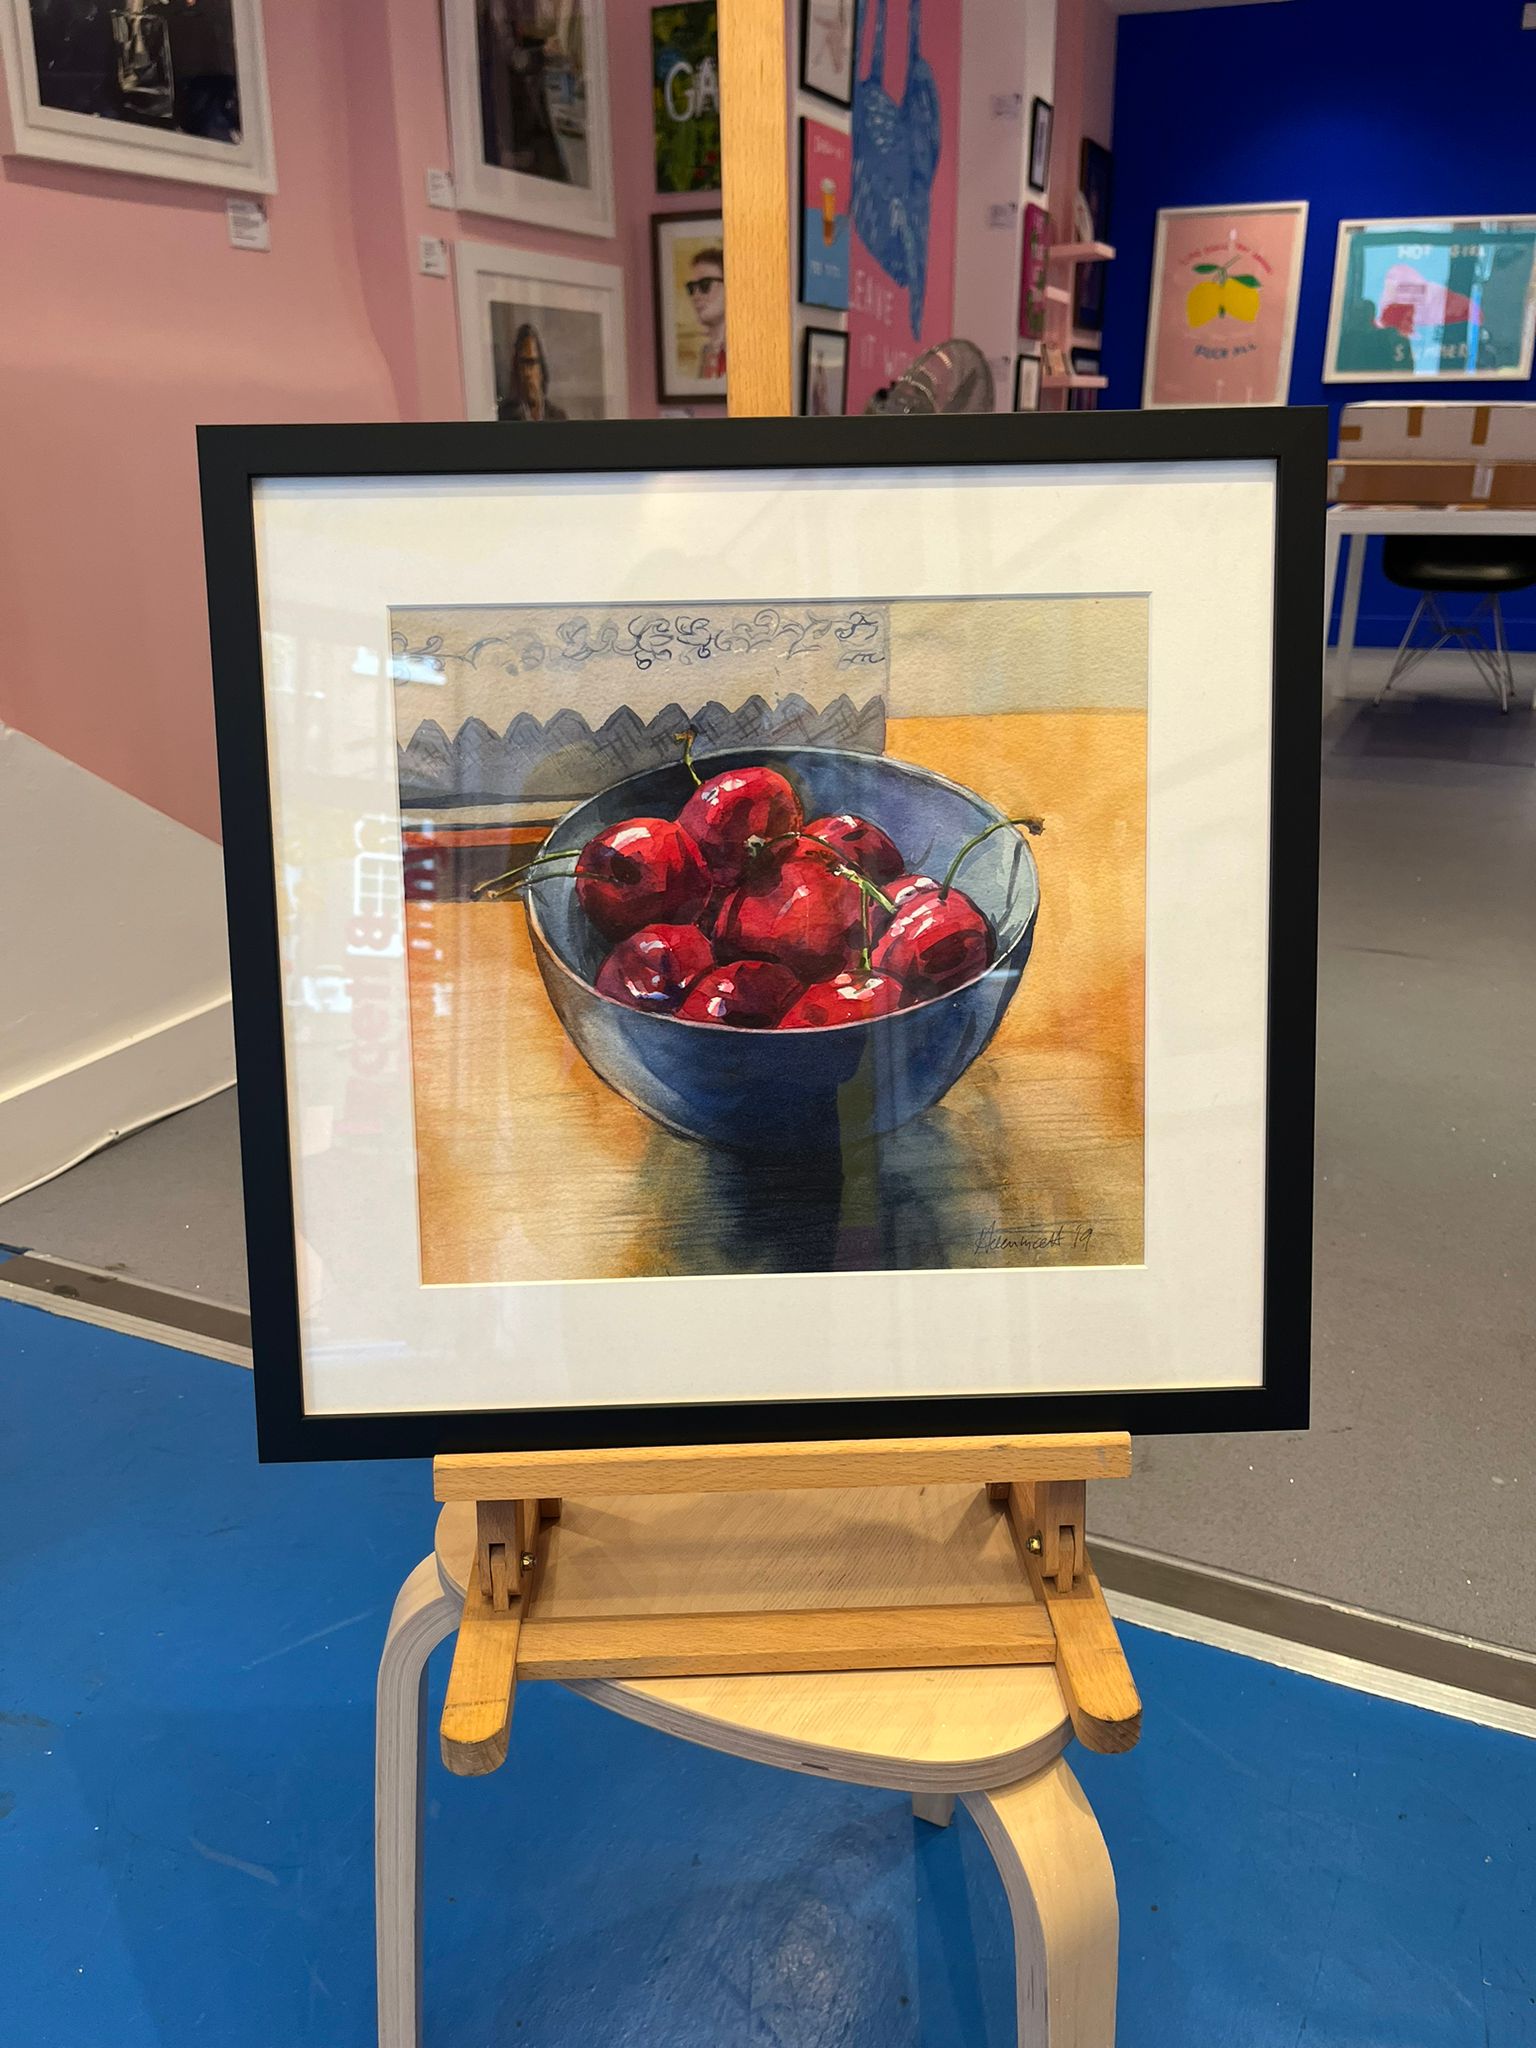 Bowl of cherries - Original Painting